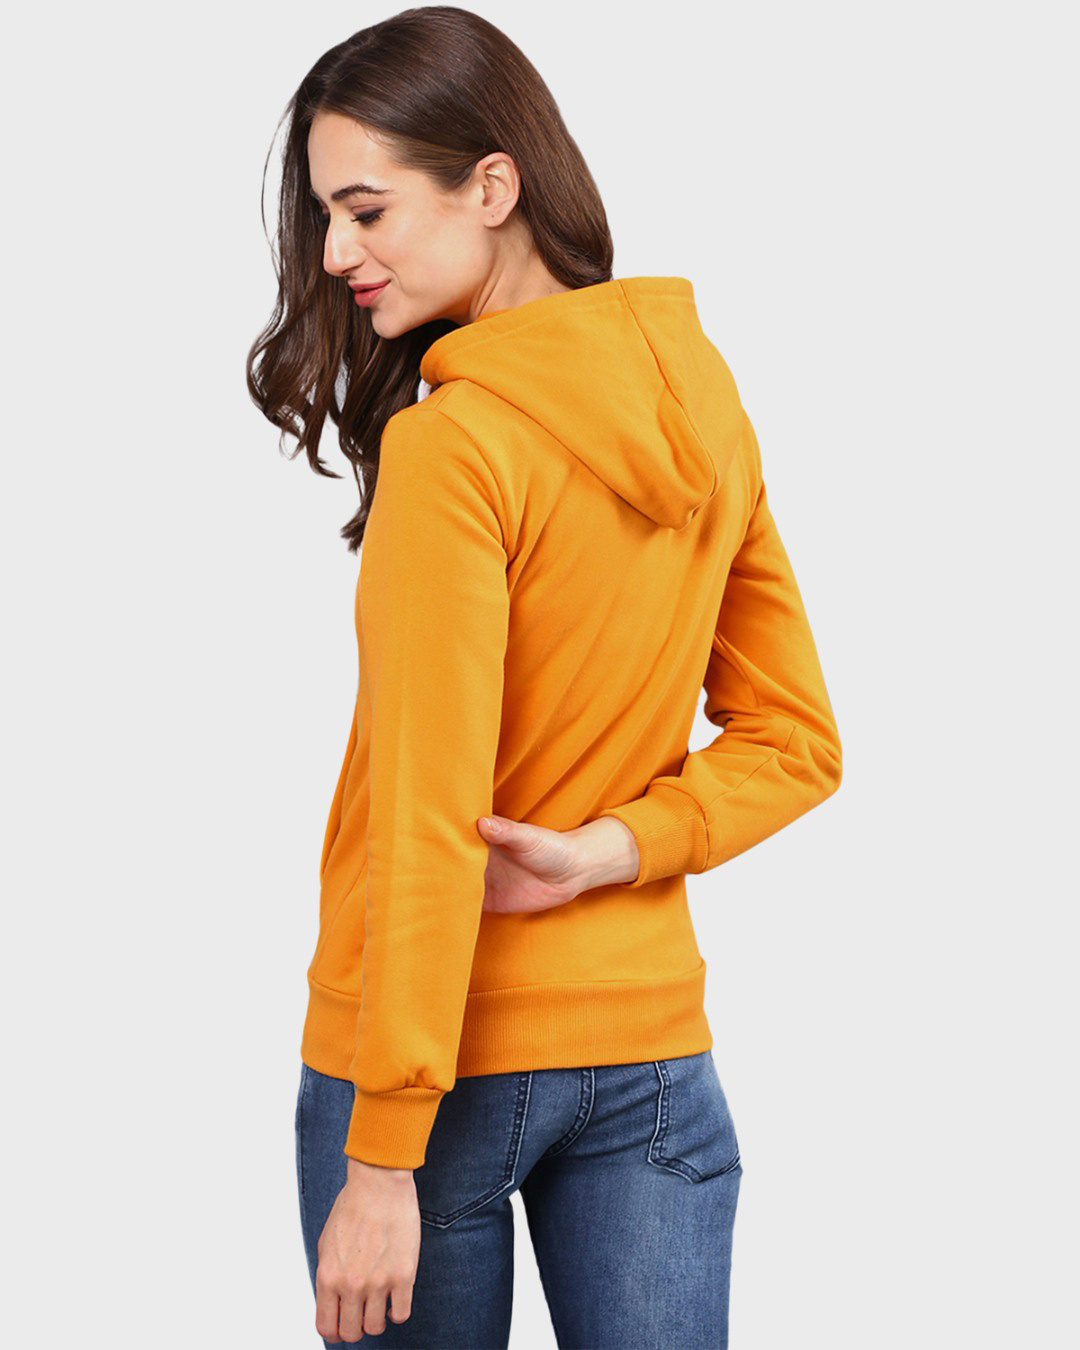 Shop Women's Yellow Solid Stylish Casual Zipper Hooded Sweatshirt-Back